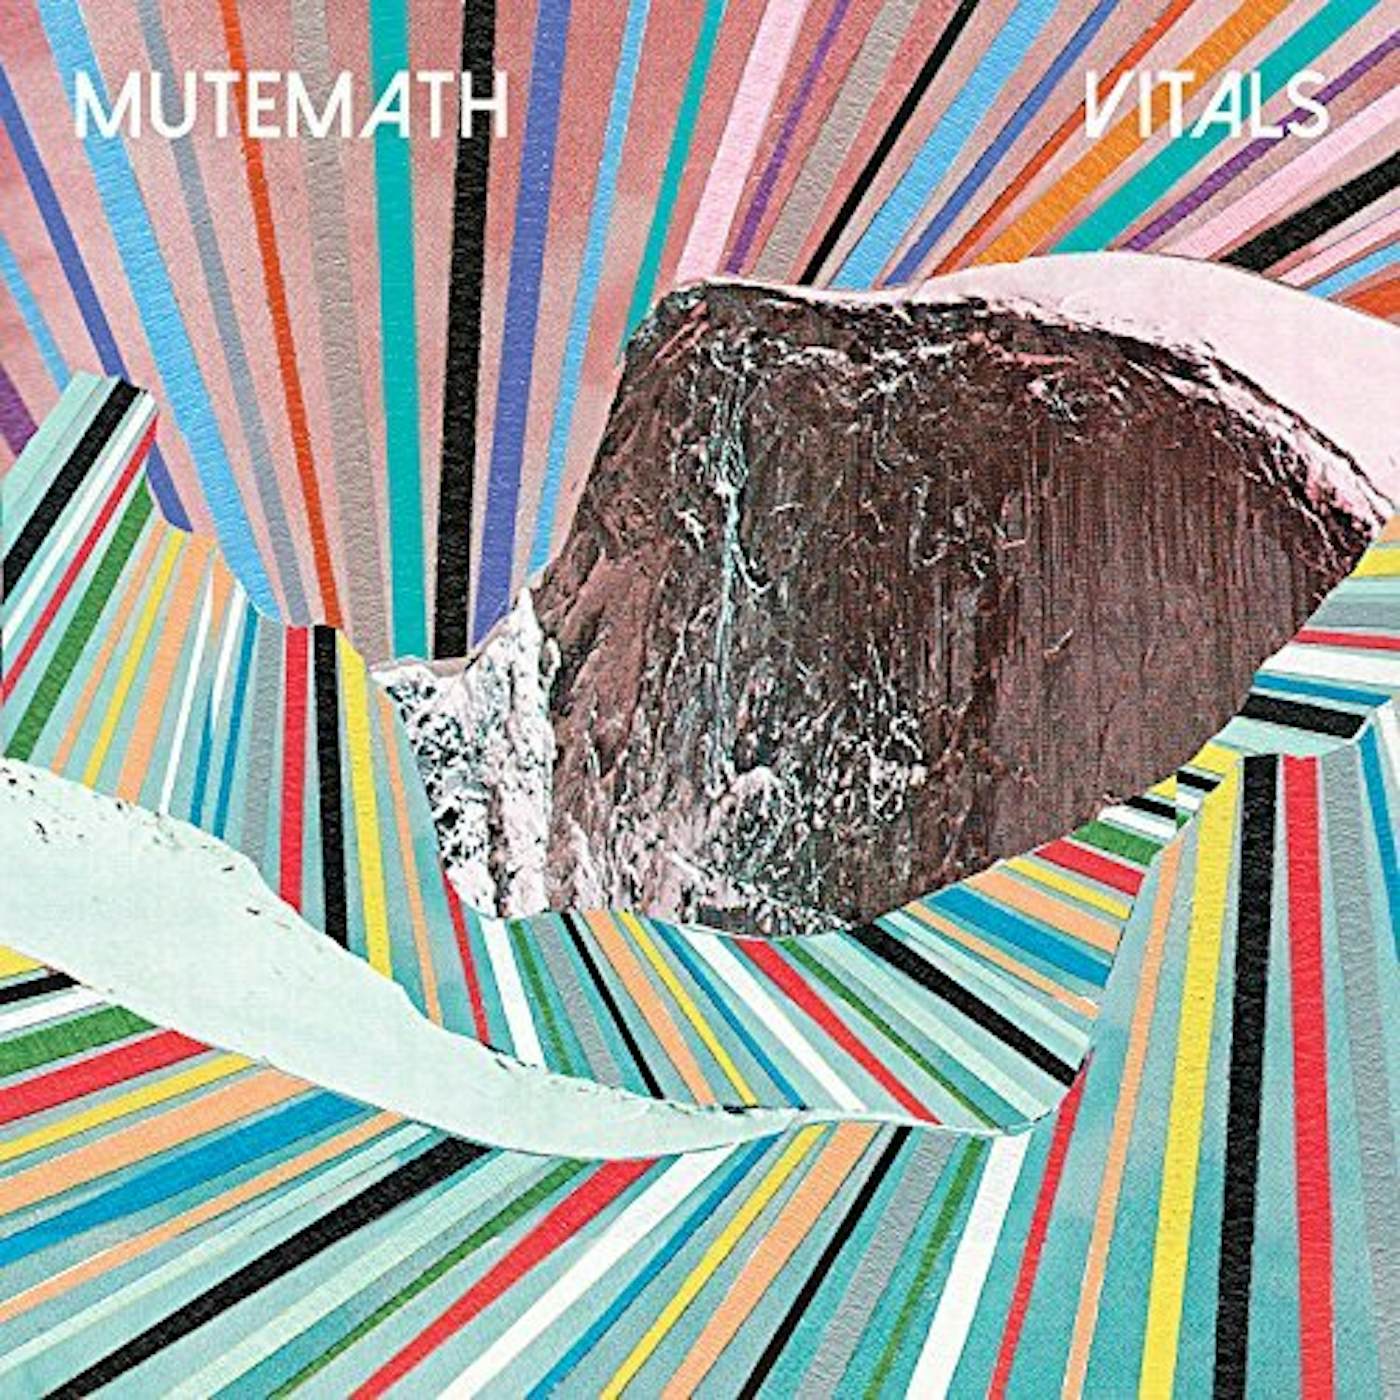 Mutemath Vitals Vinyl Record